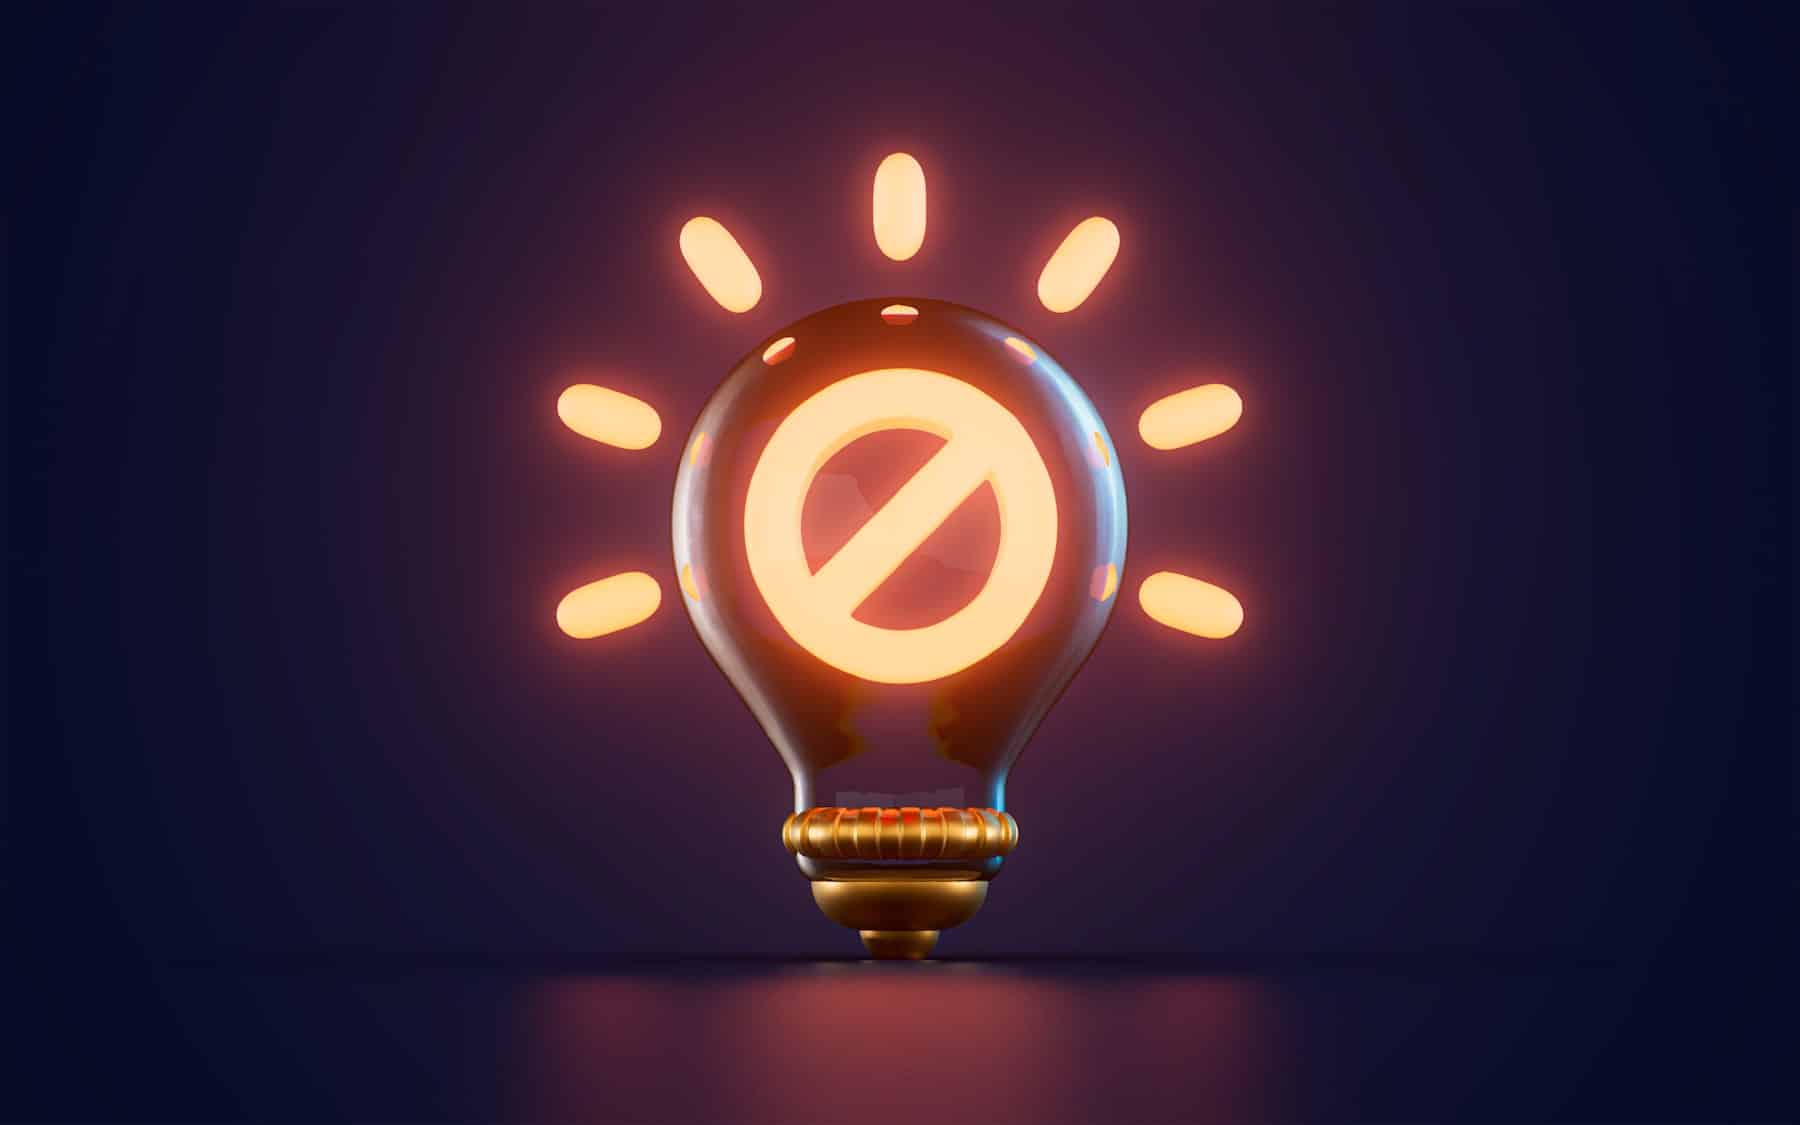 ban stop warning icon glowing inside lightbulb dark background d render concept min